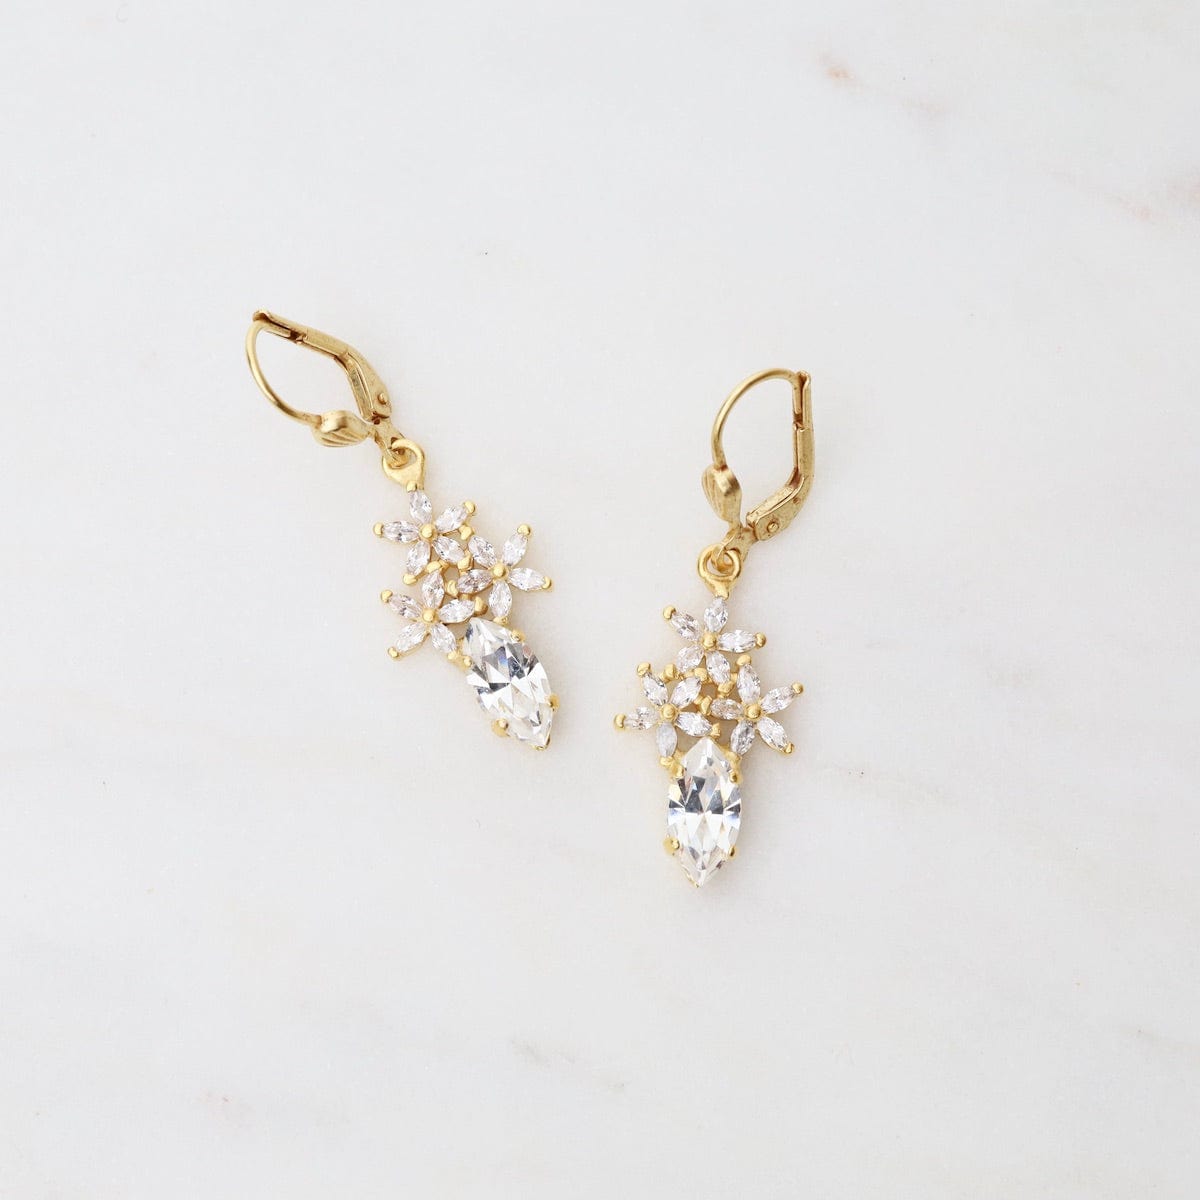 EAR-JM Rhinestone Flower and Clear Crystal Earrings - Gold Plate